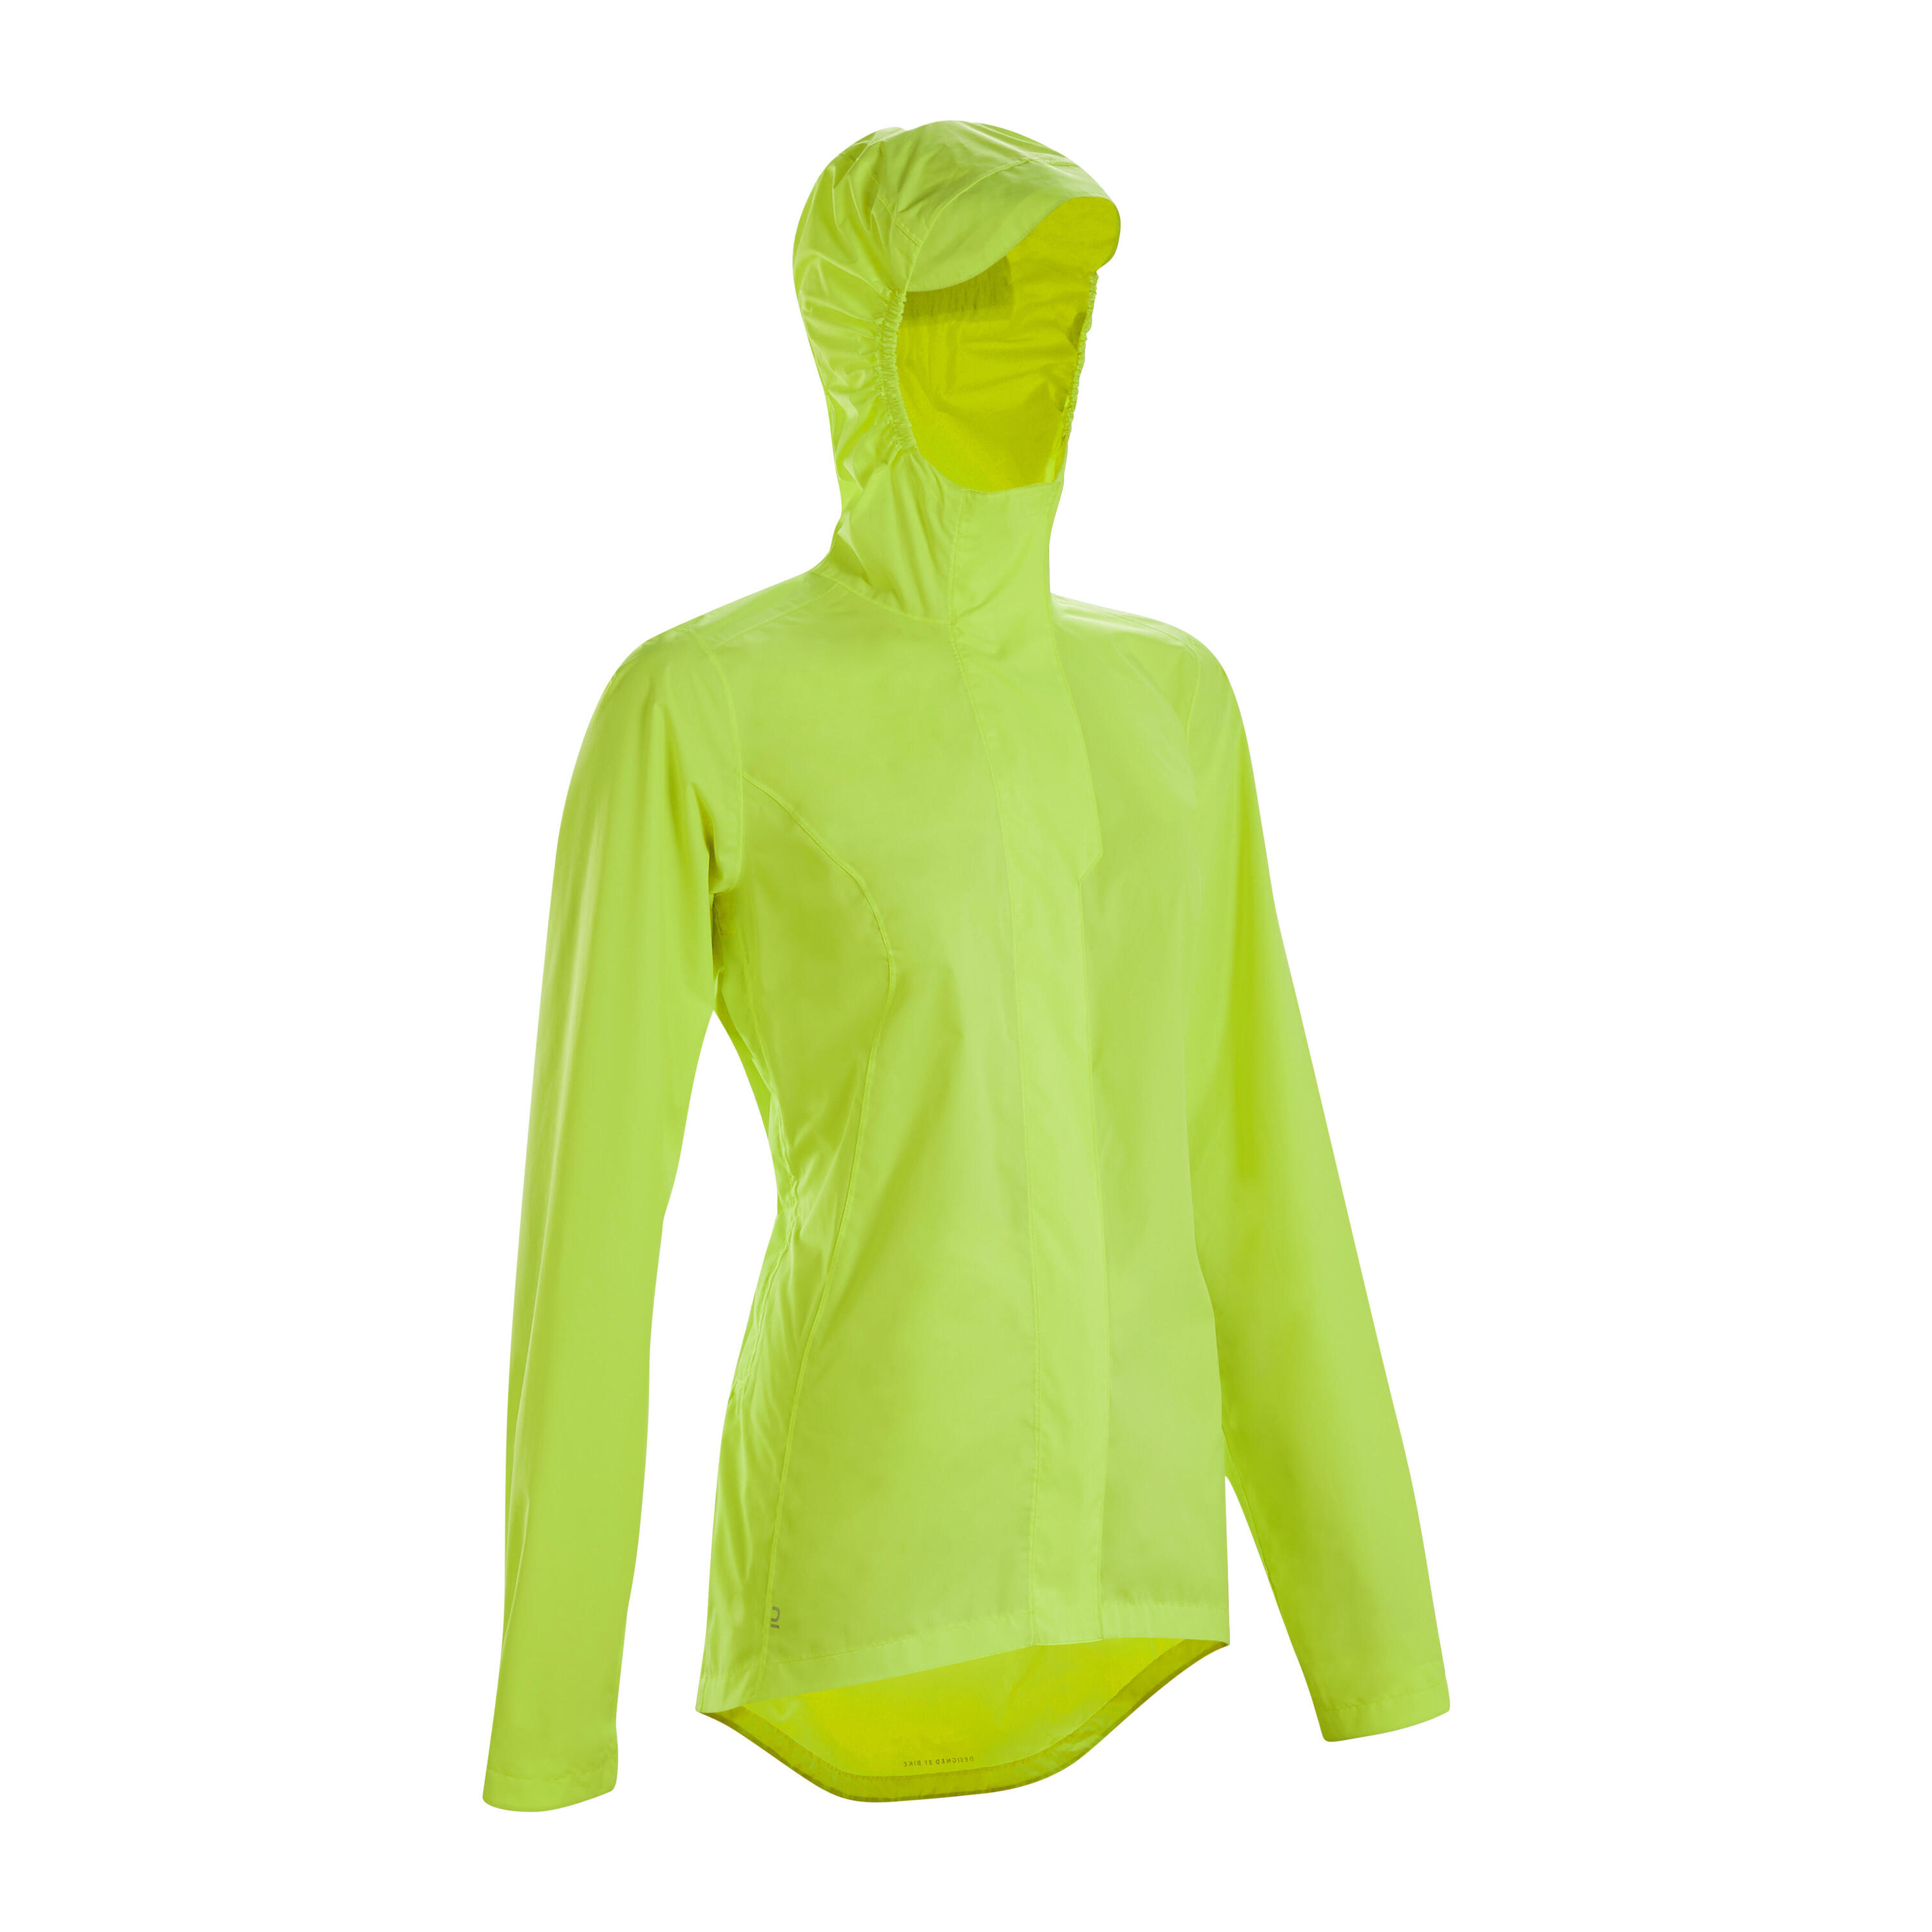 Women's Waterproof Urban Cycling Jacket - Neon Yellow 31/39